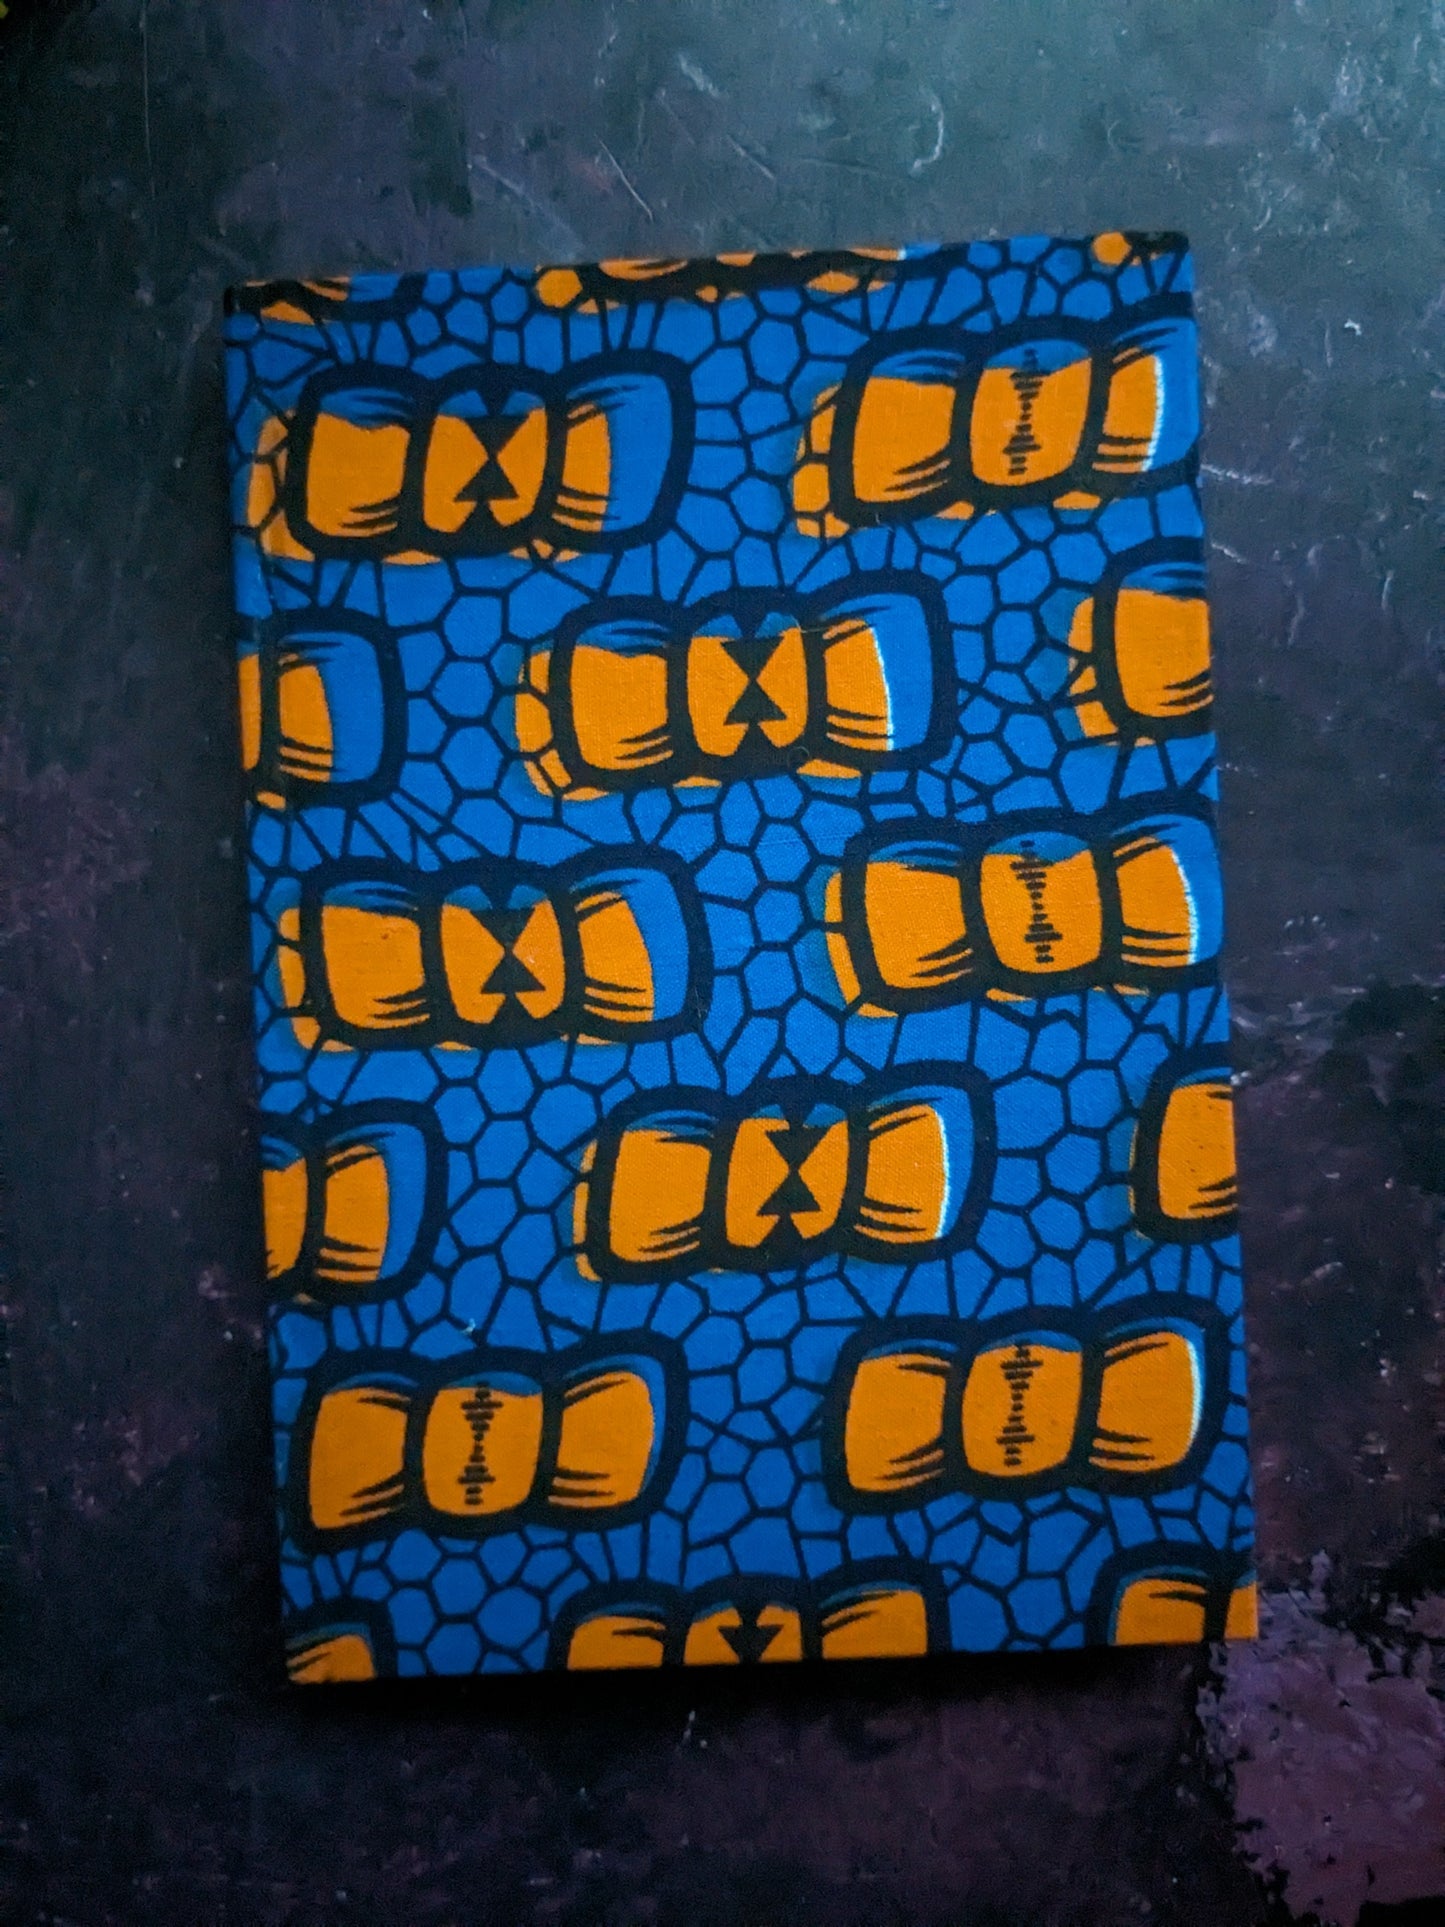 LOKUN African Print Gift Set: Blue with orange bow